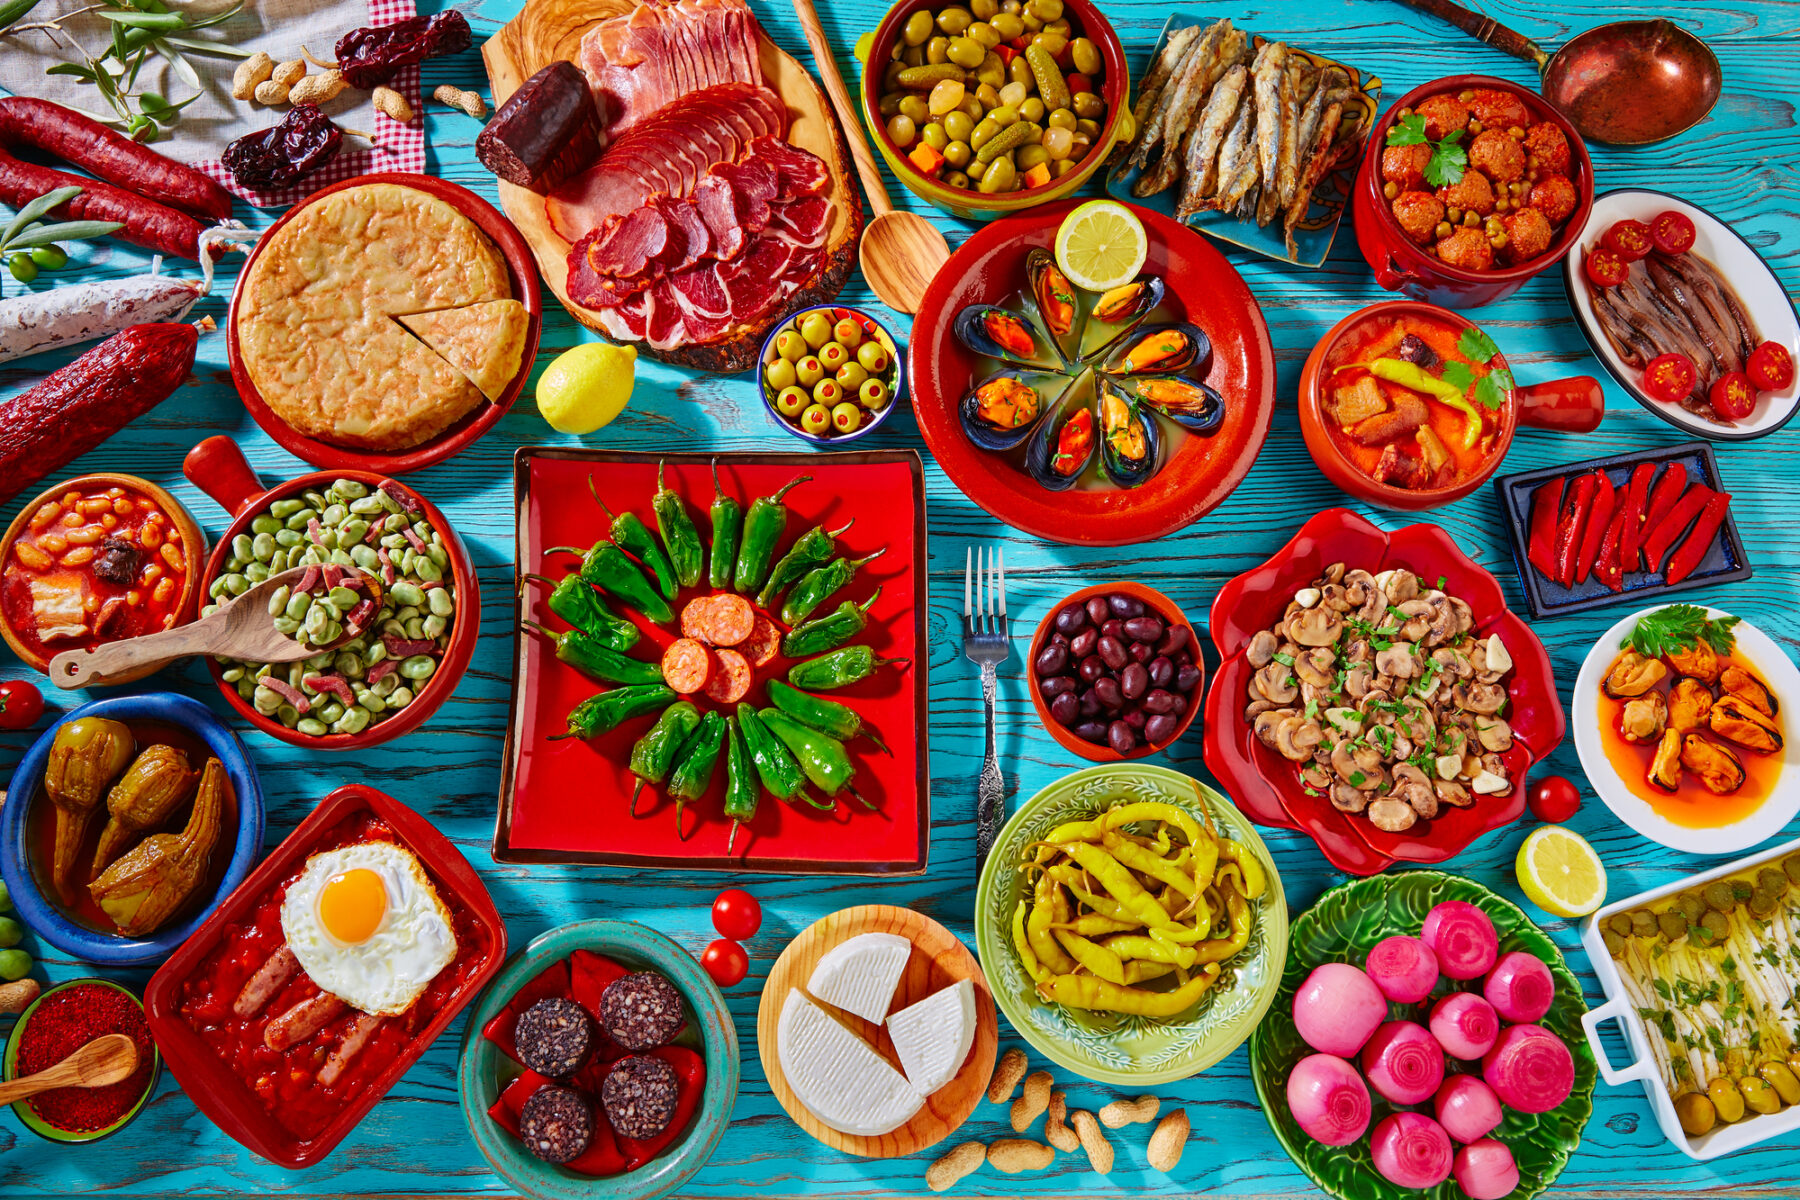 Platter of varied foods